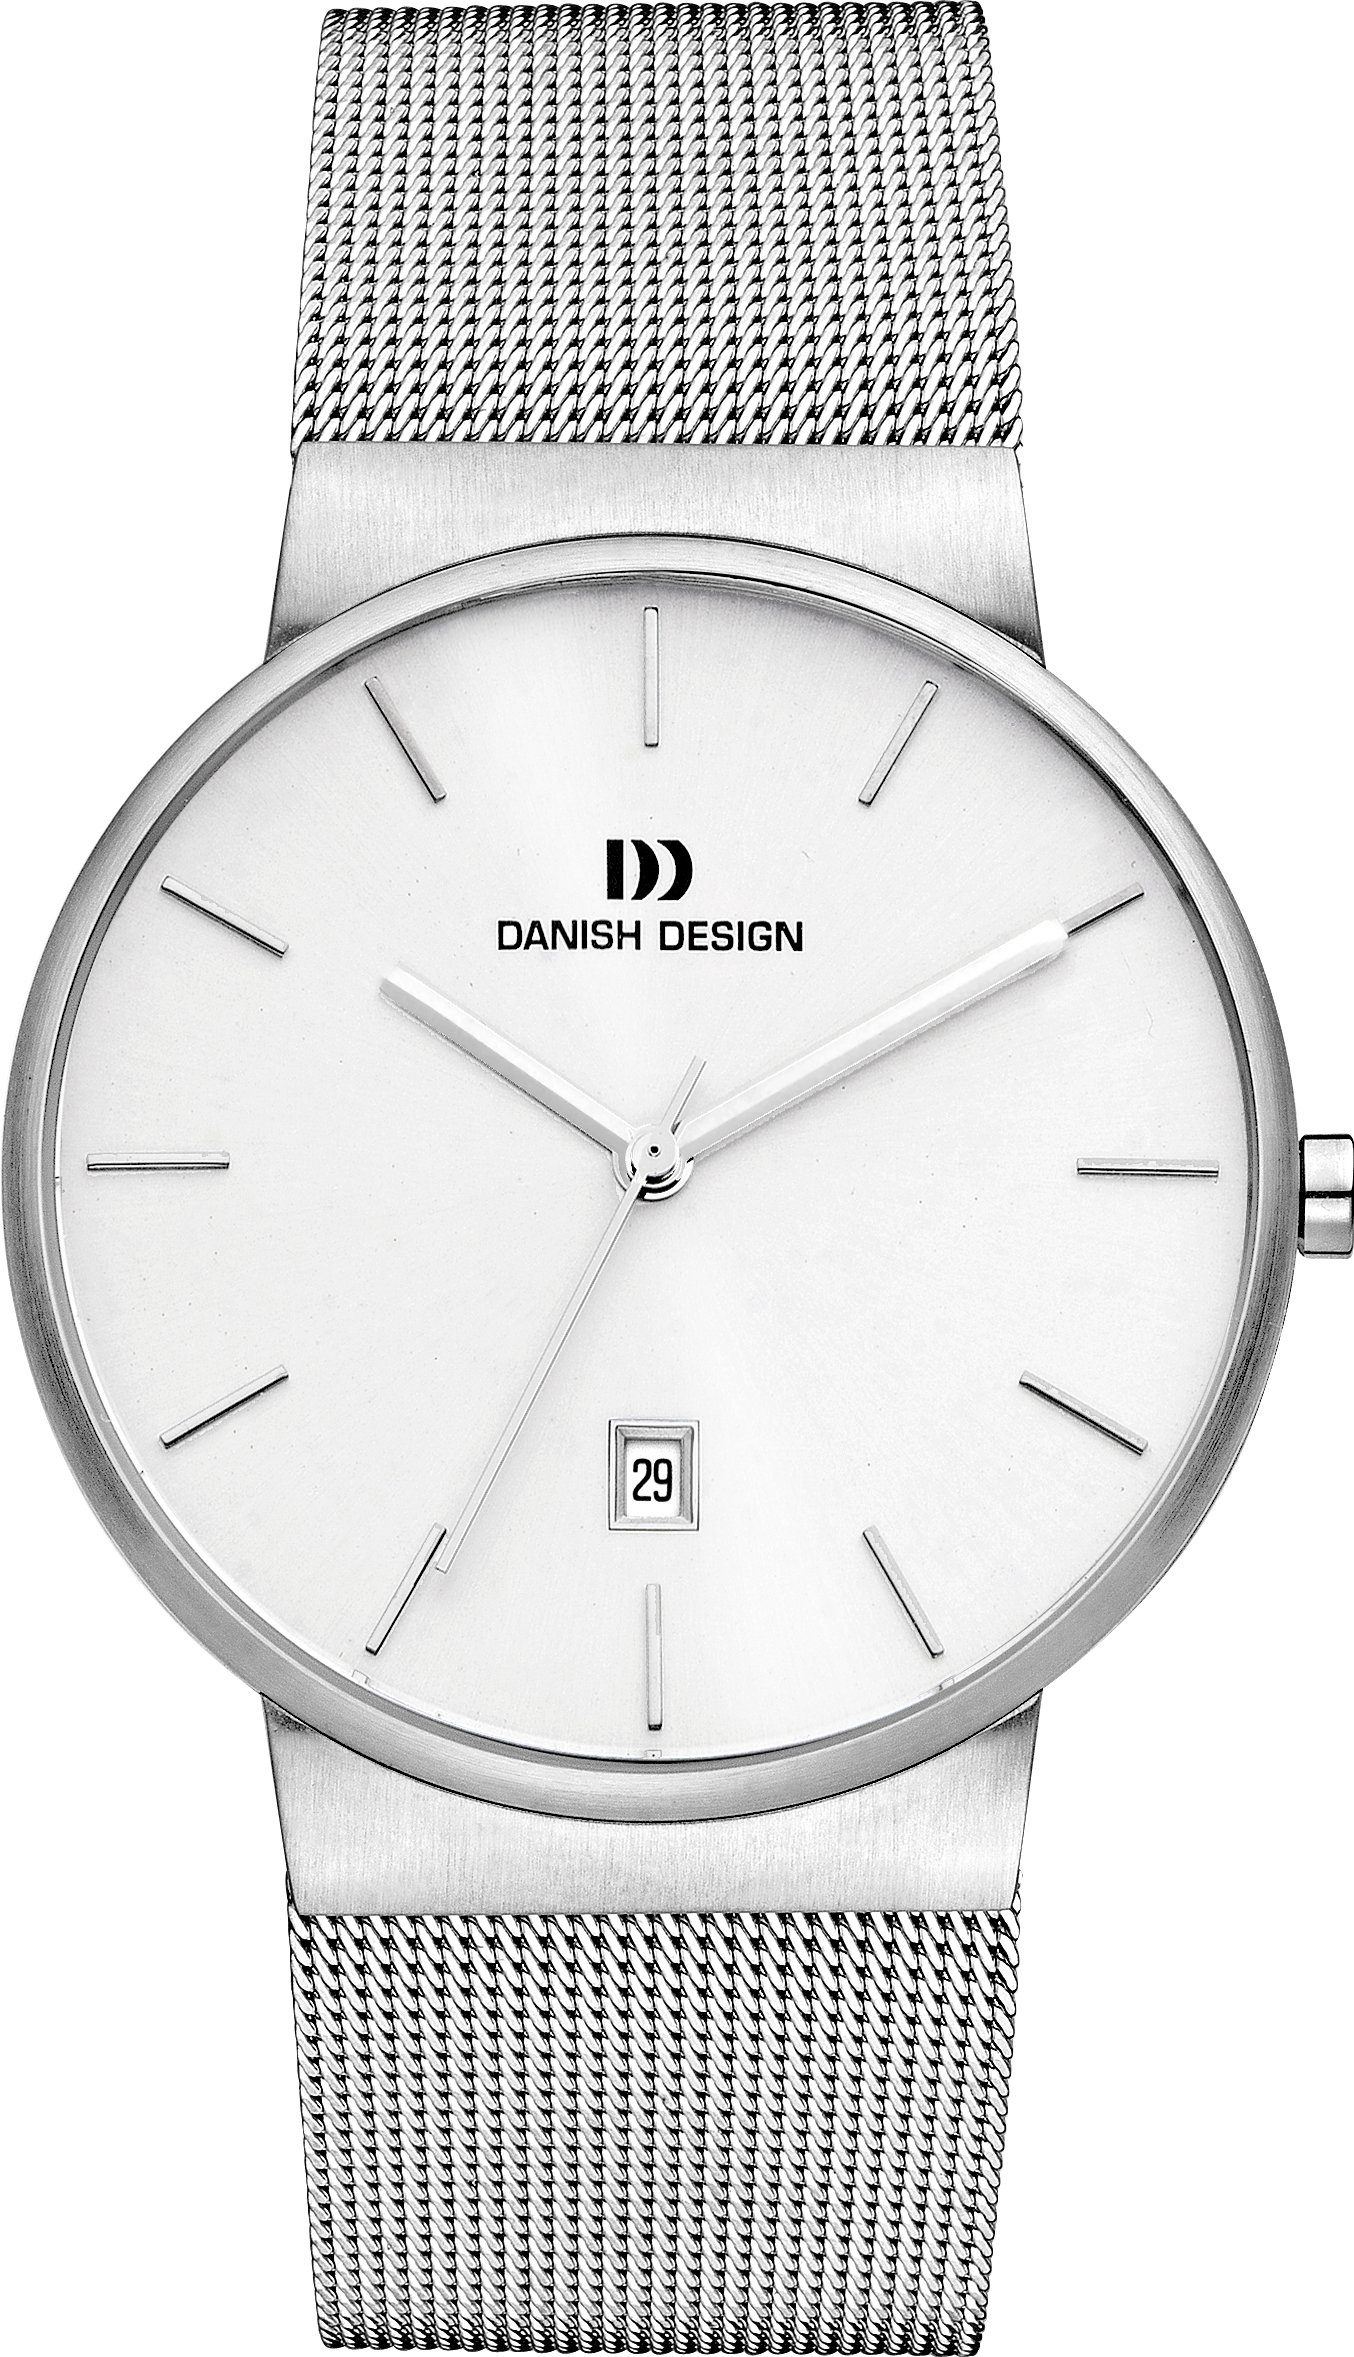 Datum 6 Silber bei Danish TAGE Uhr Quarzuhr Datum mit Herren Designuhr 40mm, Design